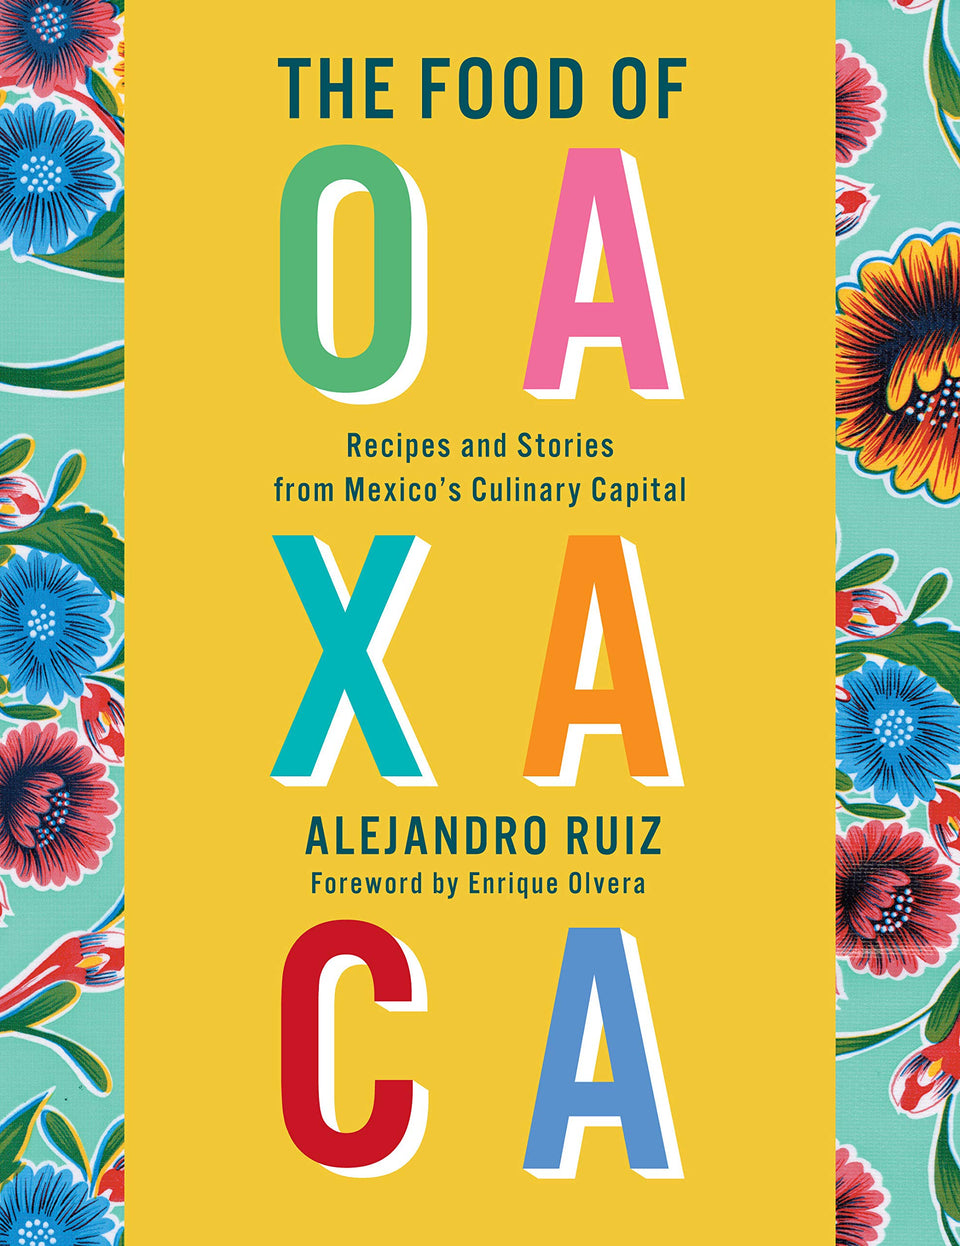 The Food of Oaxaca: Alejandro Ruiz